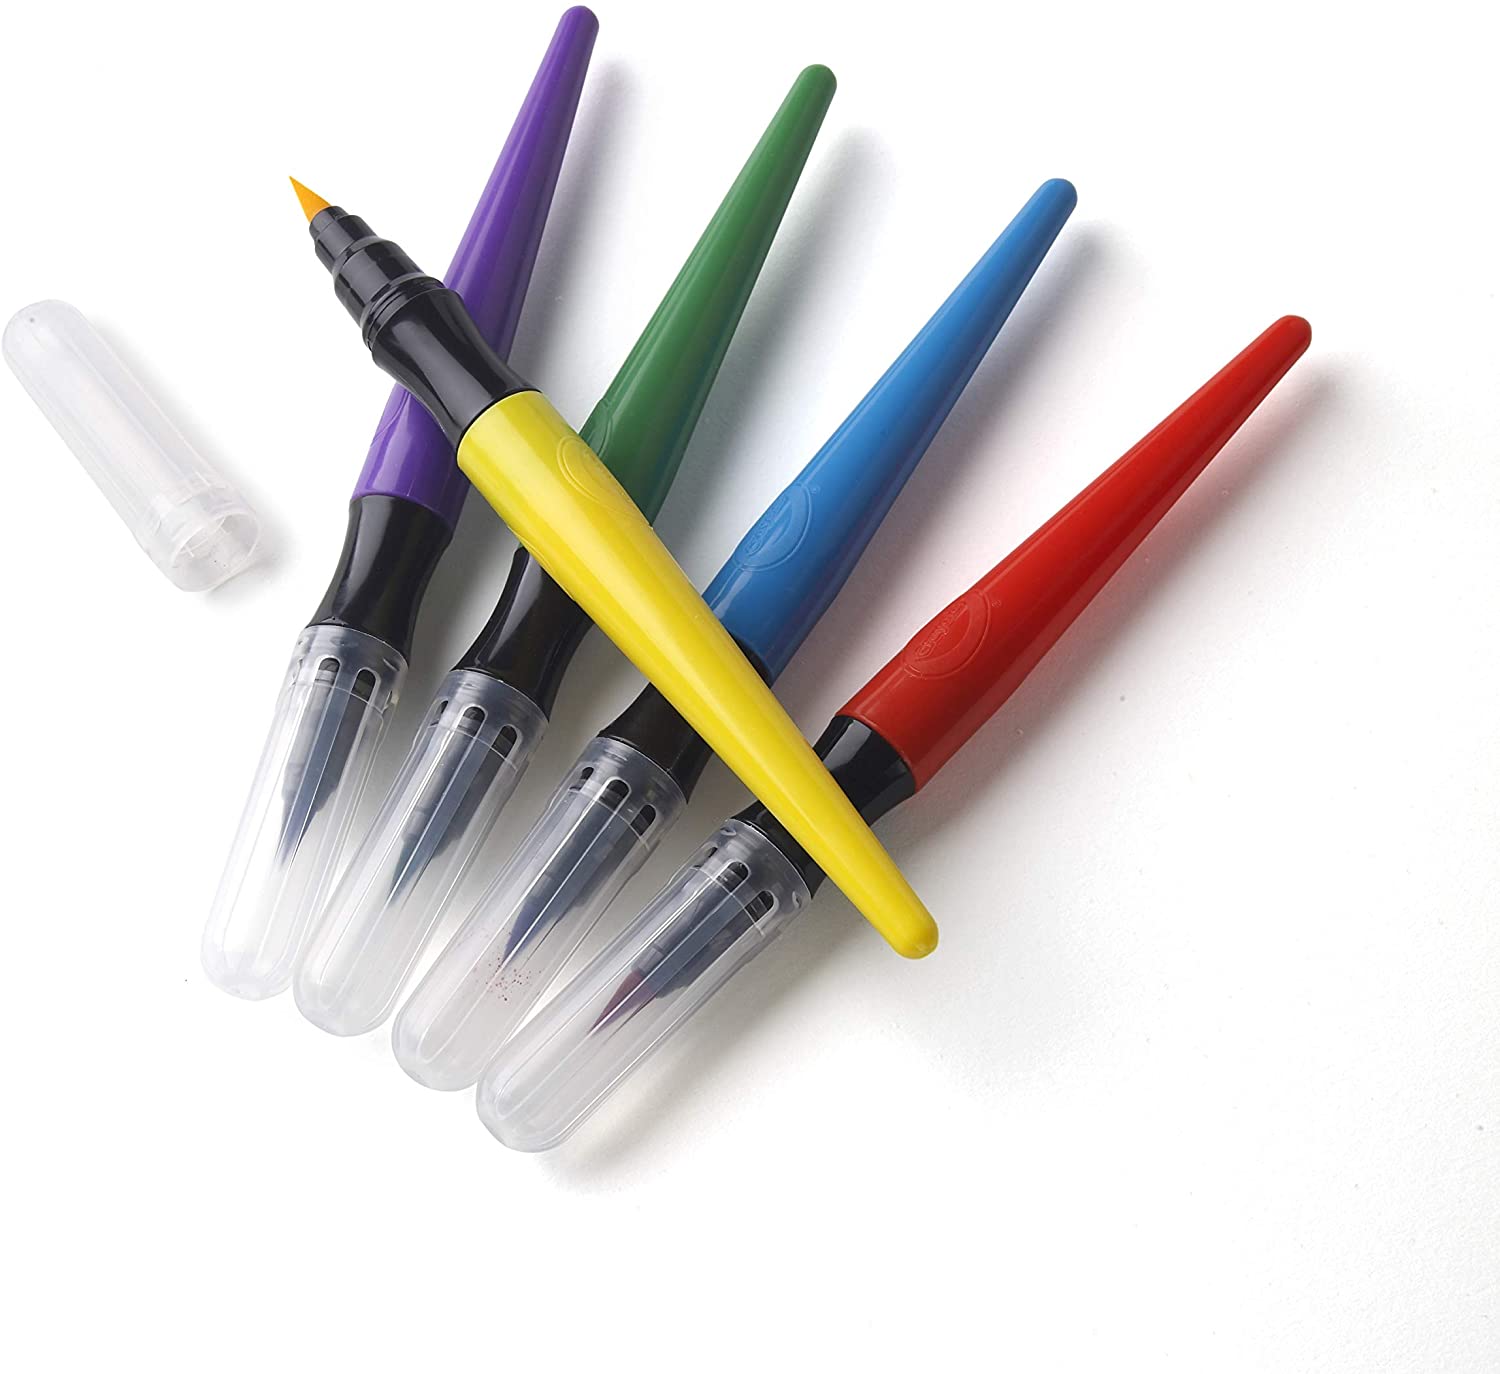 Crayola 5 Ct. Washable No Drip Paint Brush Pens